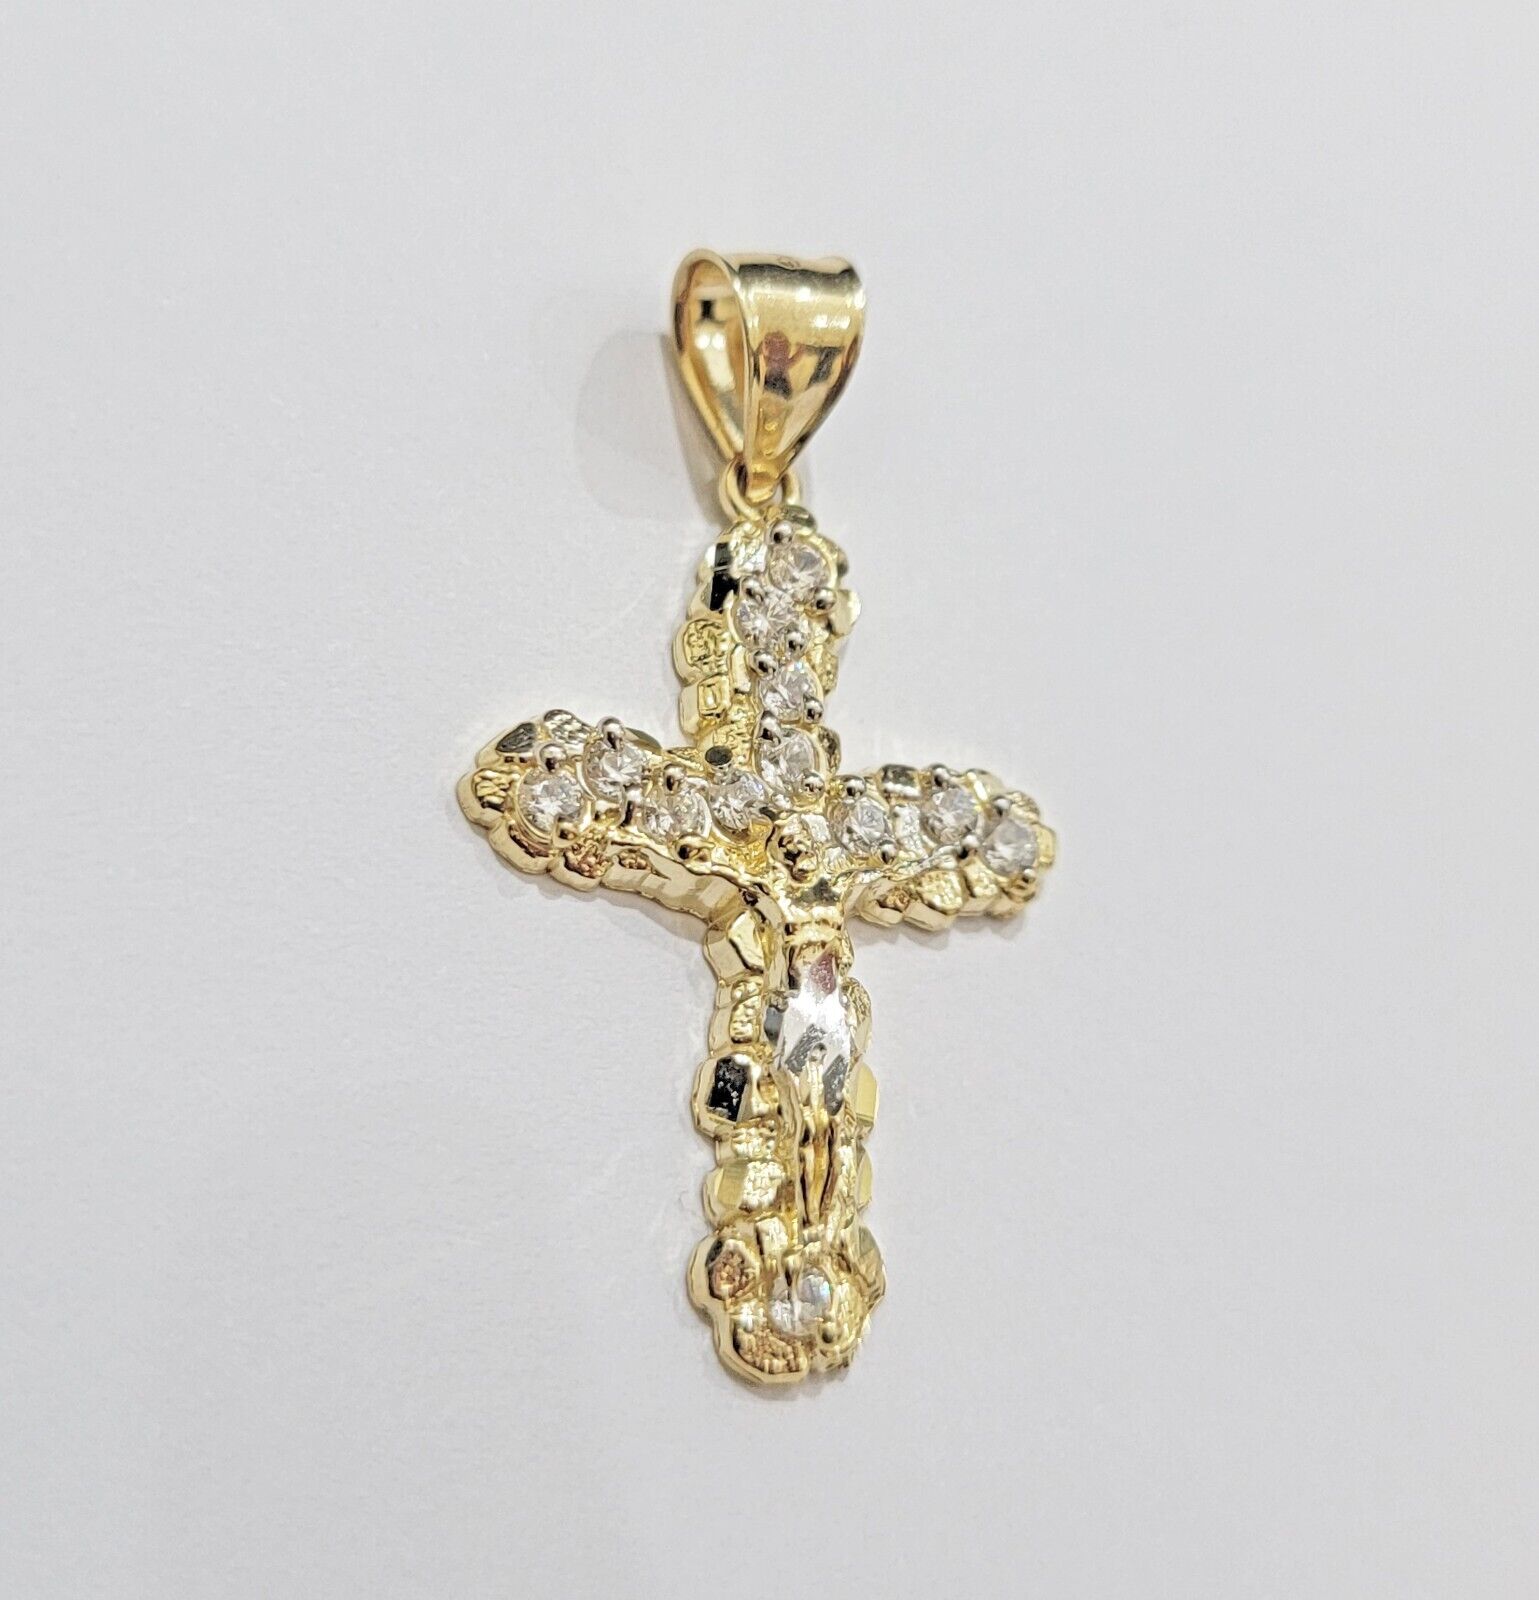 Real 10k Gold Jesus Cross Charm Chain Set Franco Necklace 2.5mm 18-24" Men Women